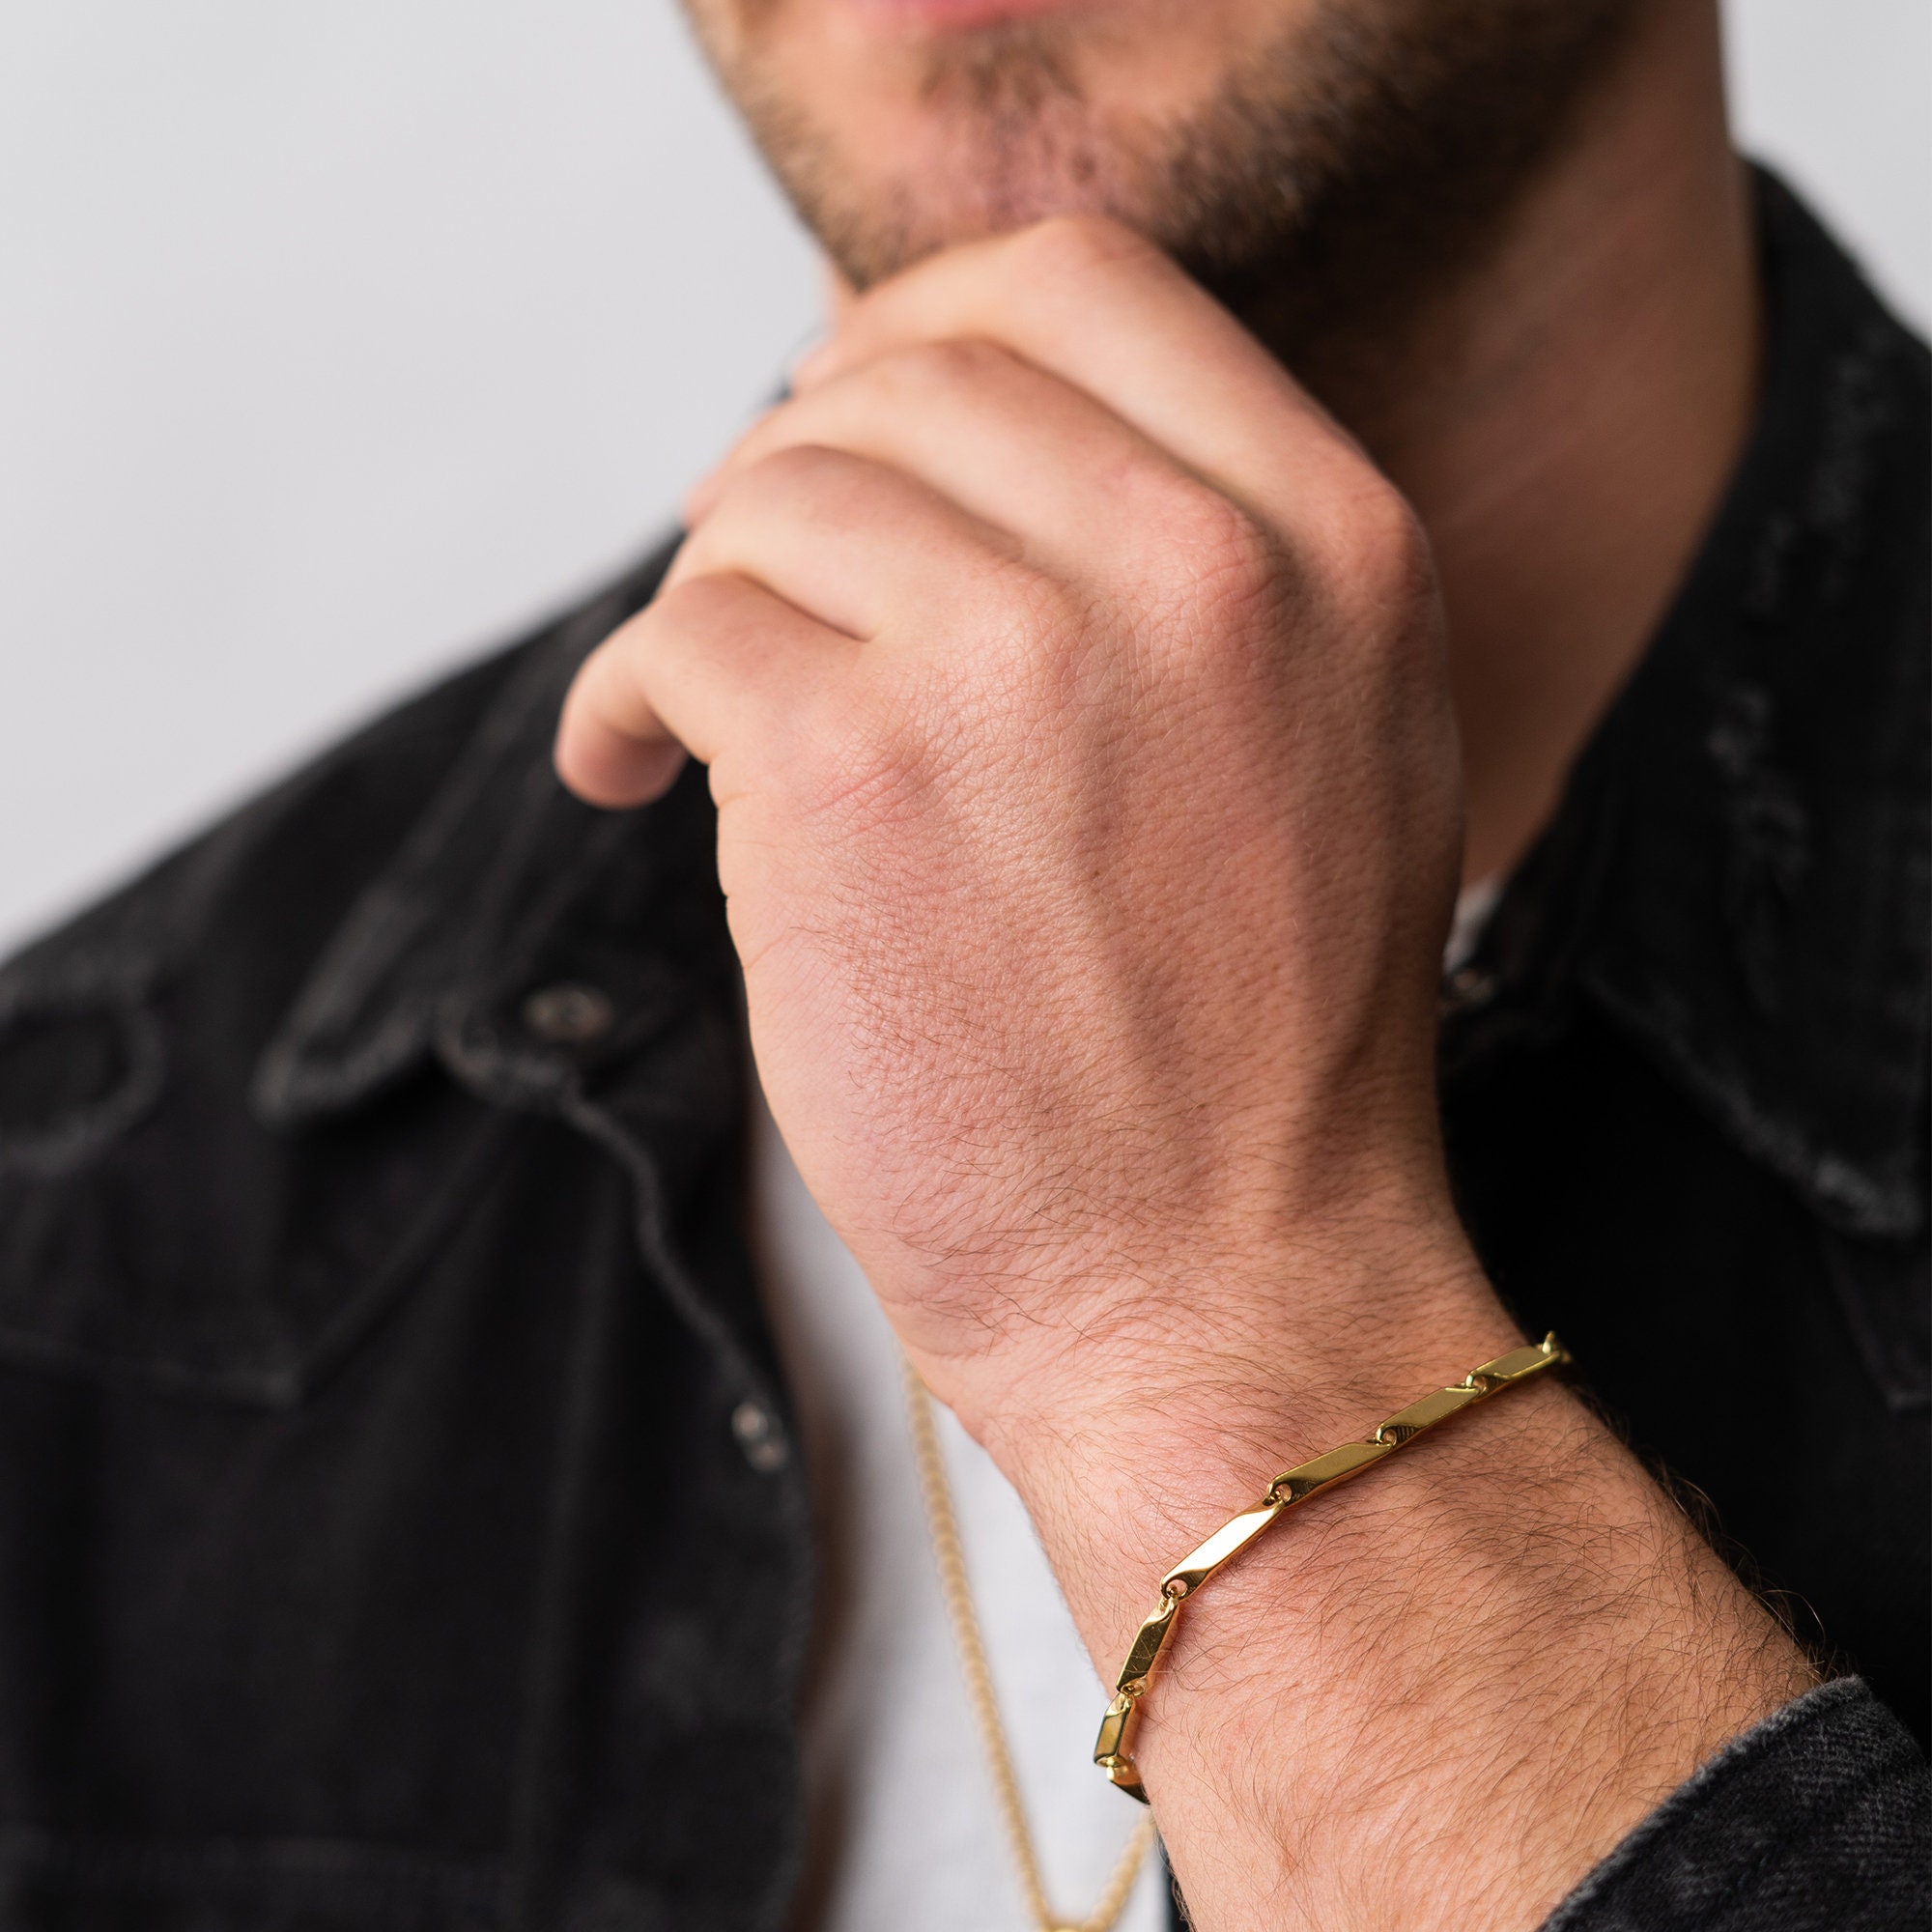 Galis Rope Bracelet For Men - Premium Stainless Steel Bracelet for Men,  Gold Plated Non Tarnish Bracelet - Our Gold Rope Chain is Stylish  Anniversary